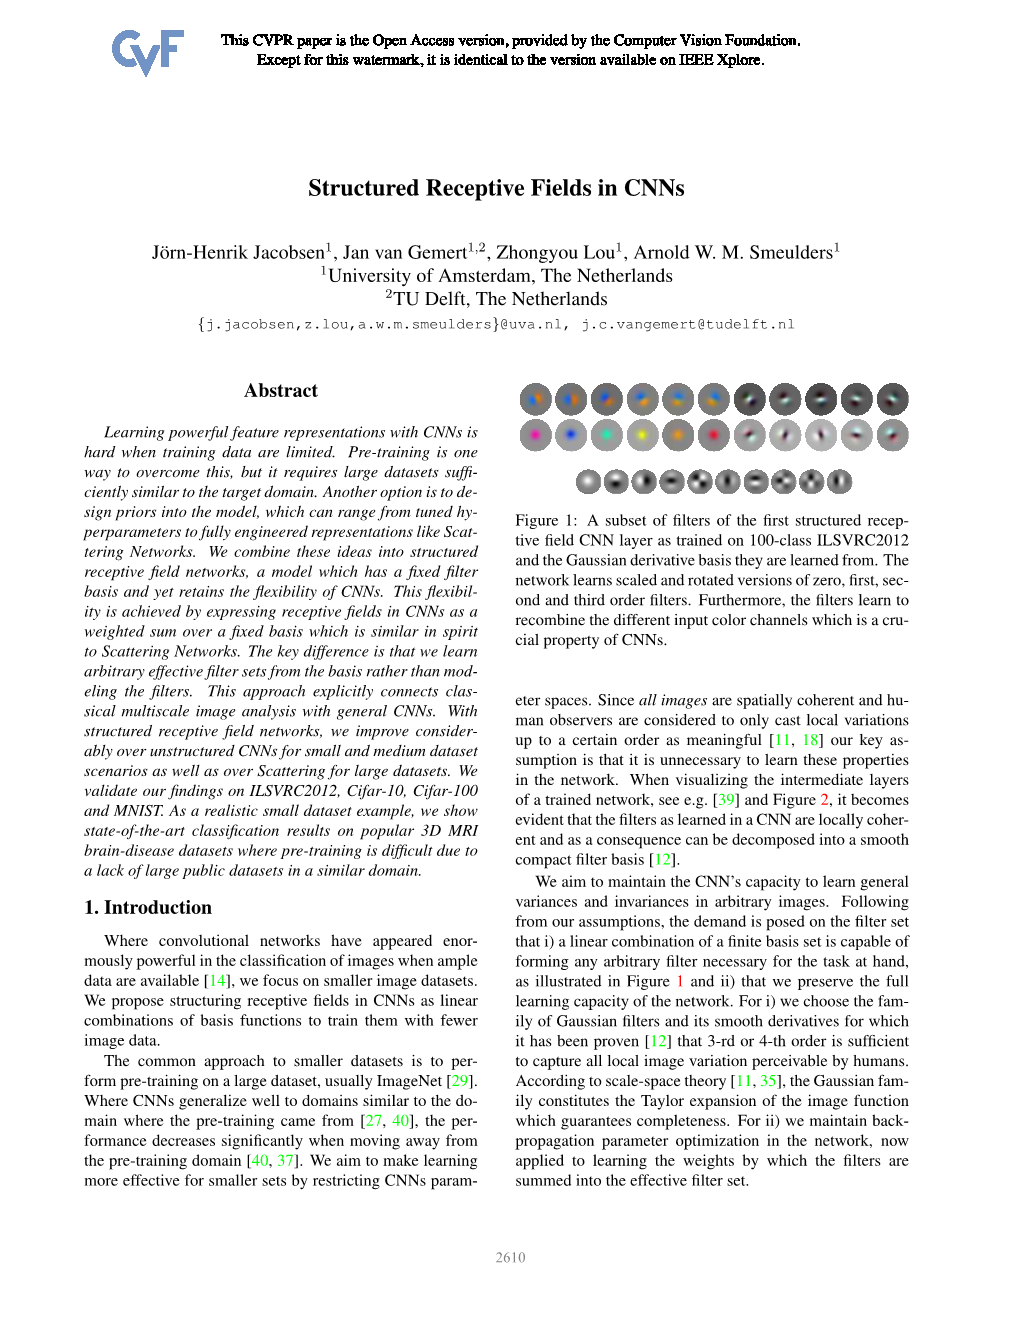 Structured Receptive Fields in Cnns